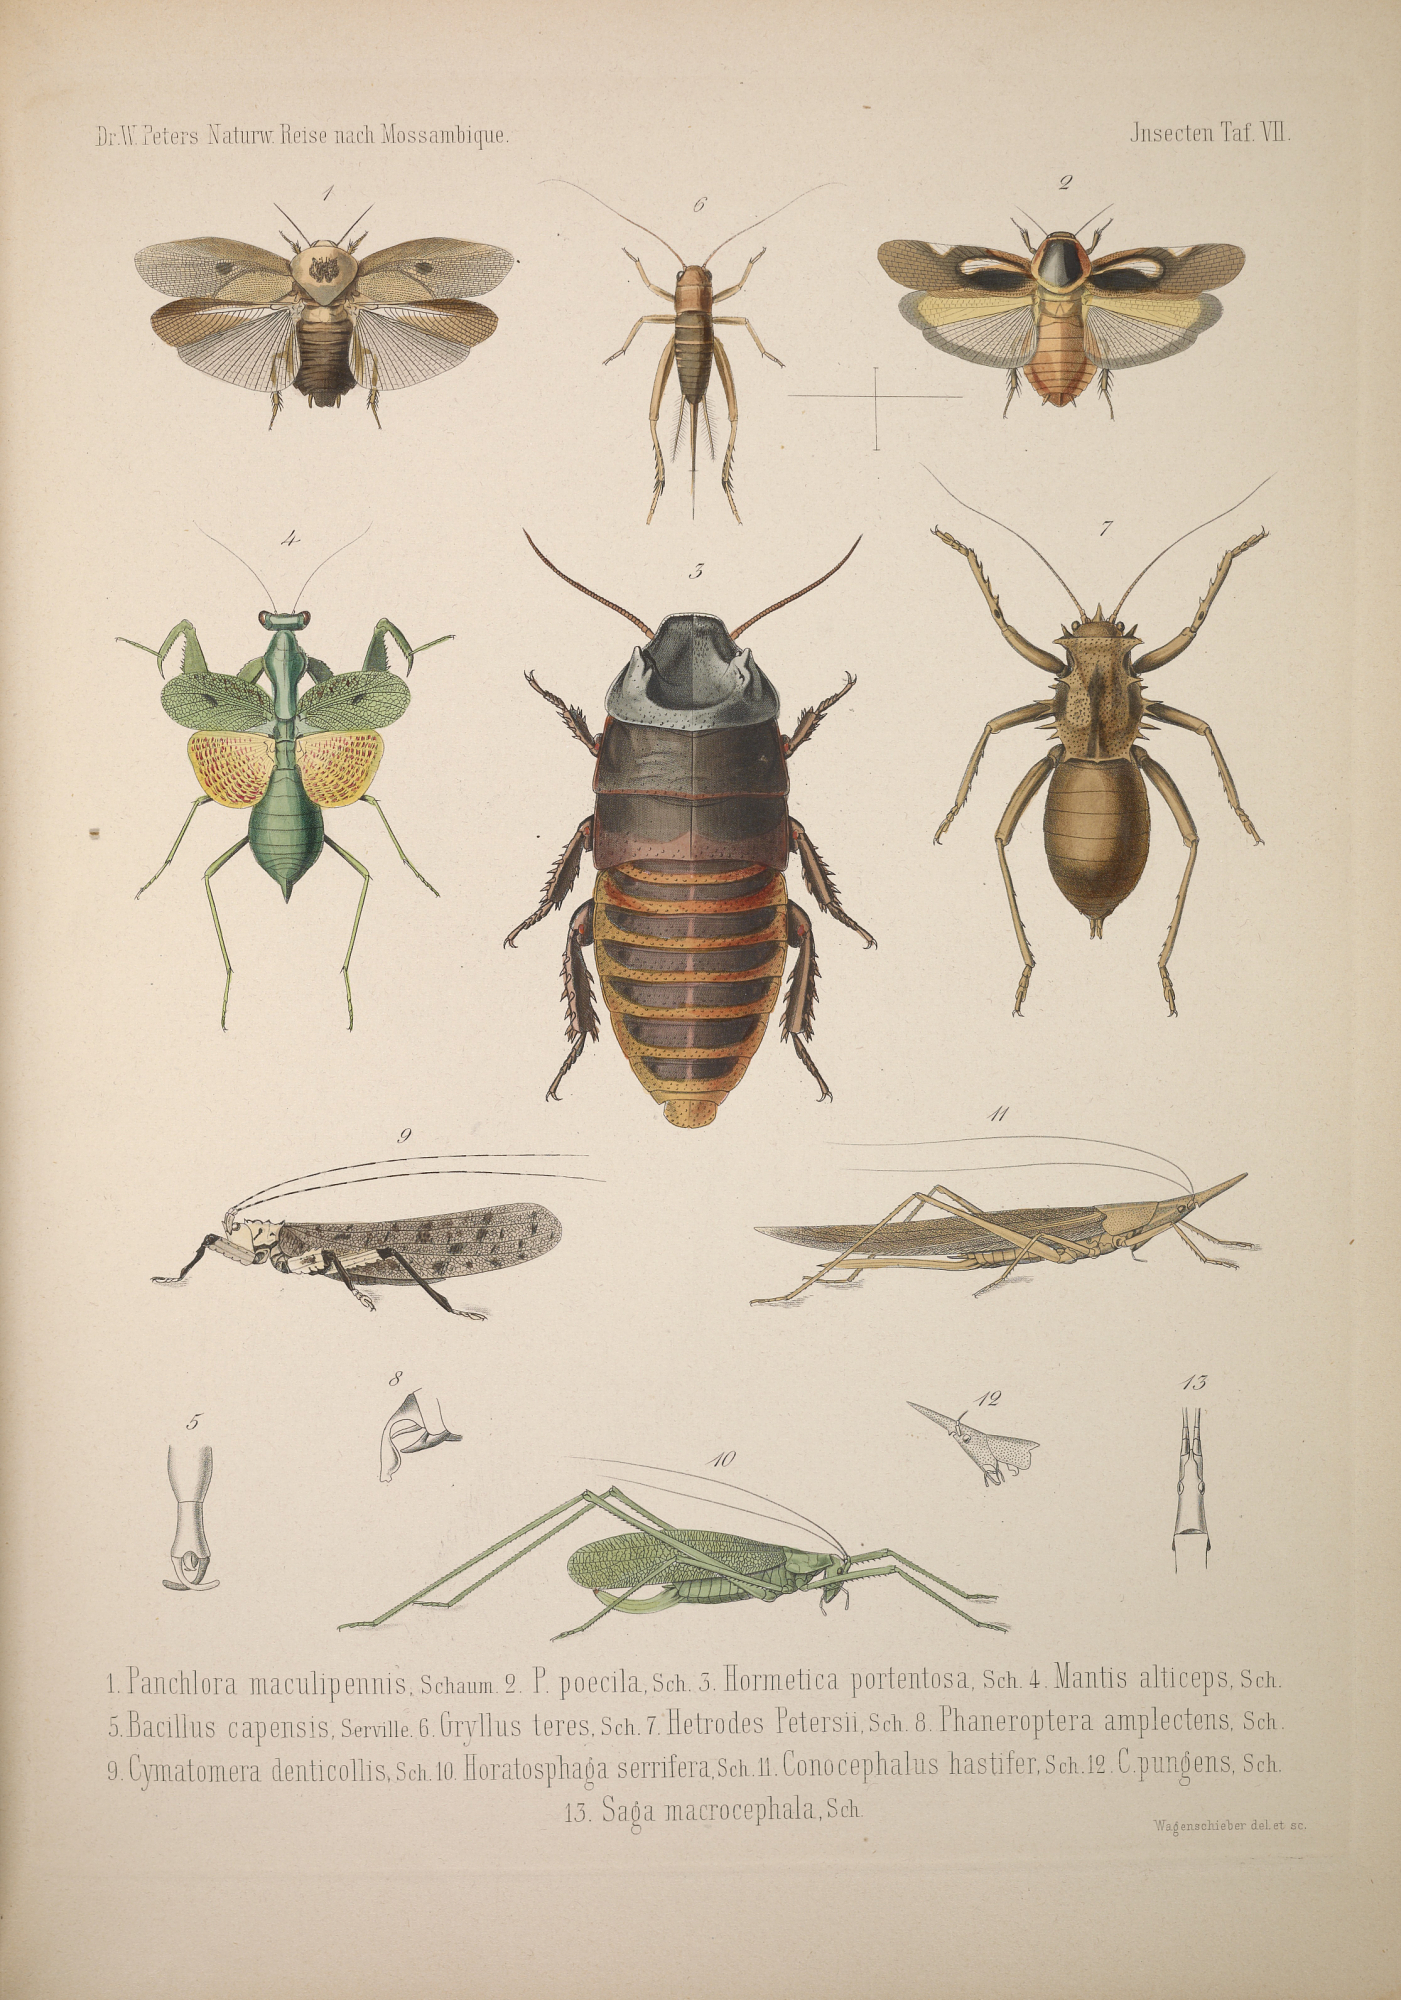 Includes species of cockroach, mantid, cricket, and katydid